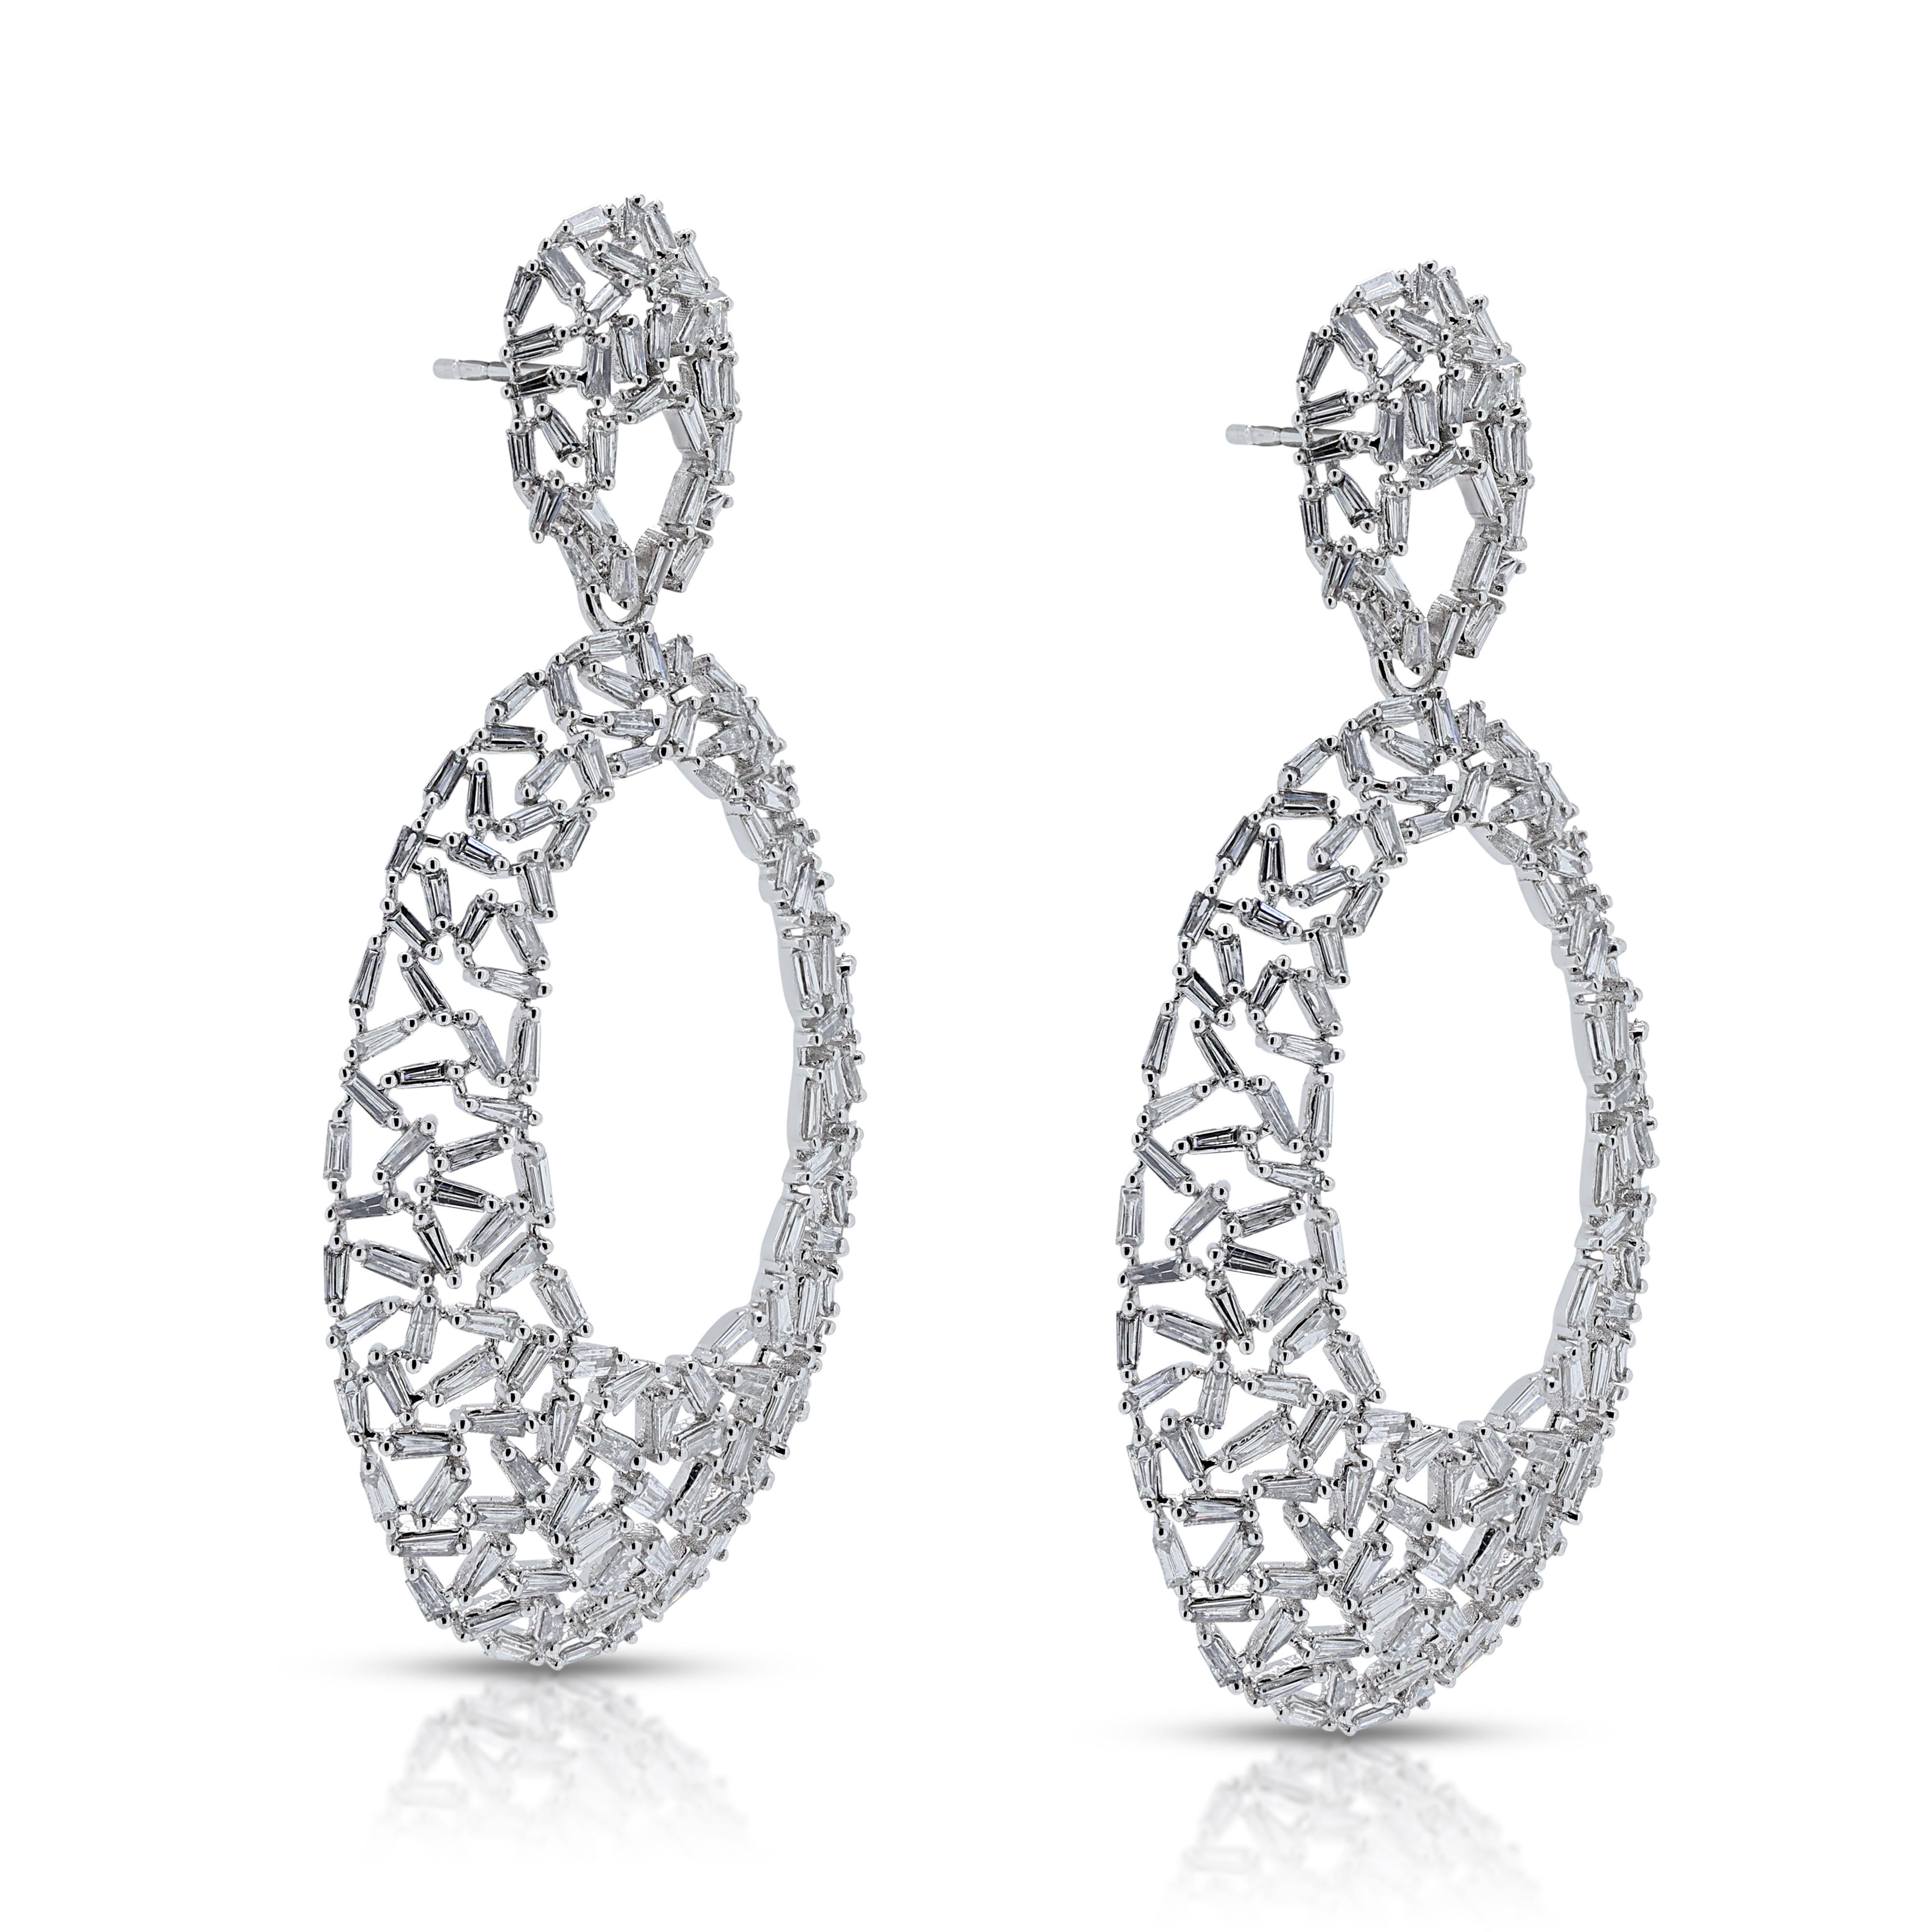 Round Cut Fabulous 3.26ct Diamonds Drop Earrings in 18K White Gold For Sale